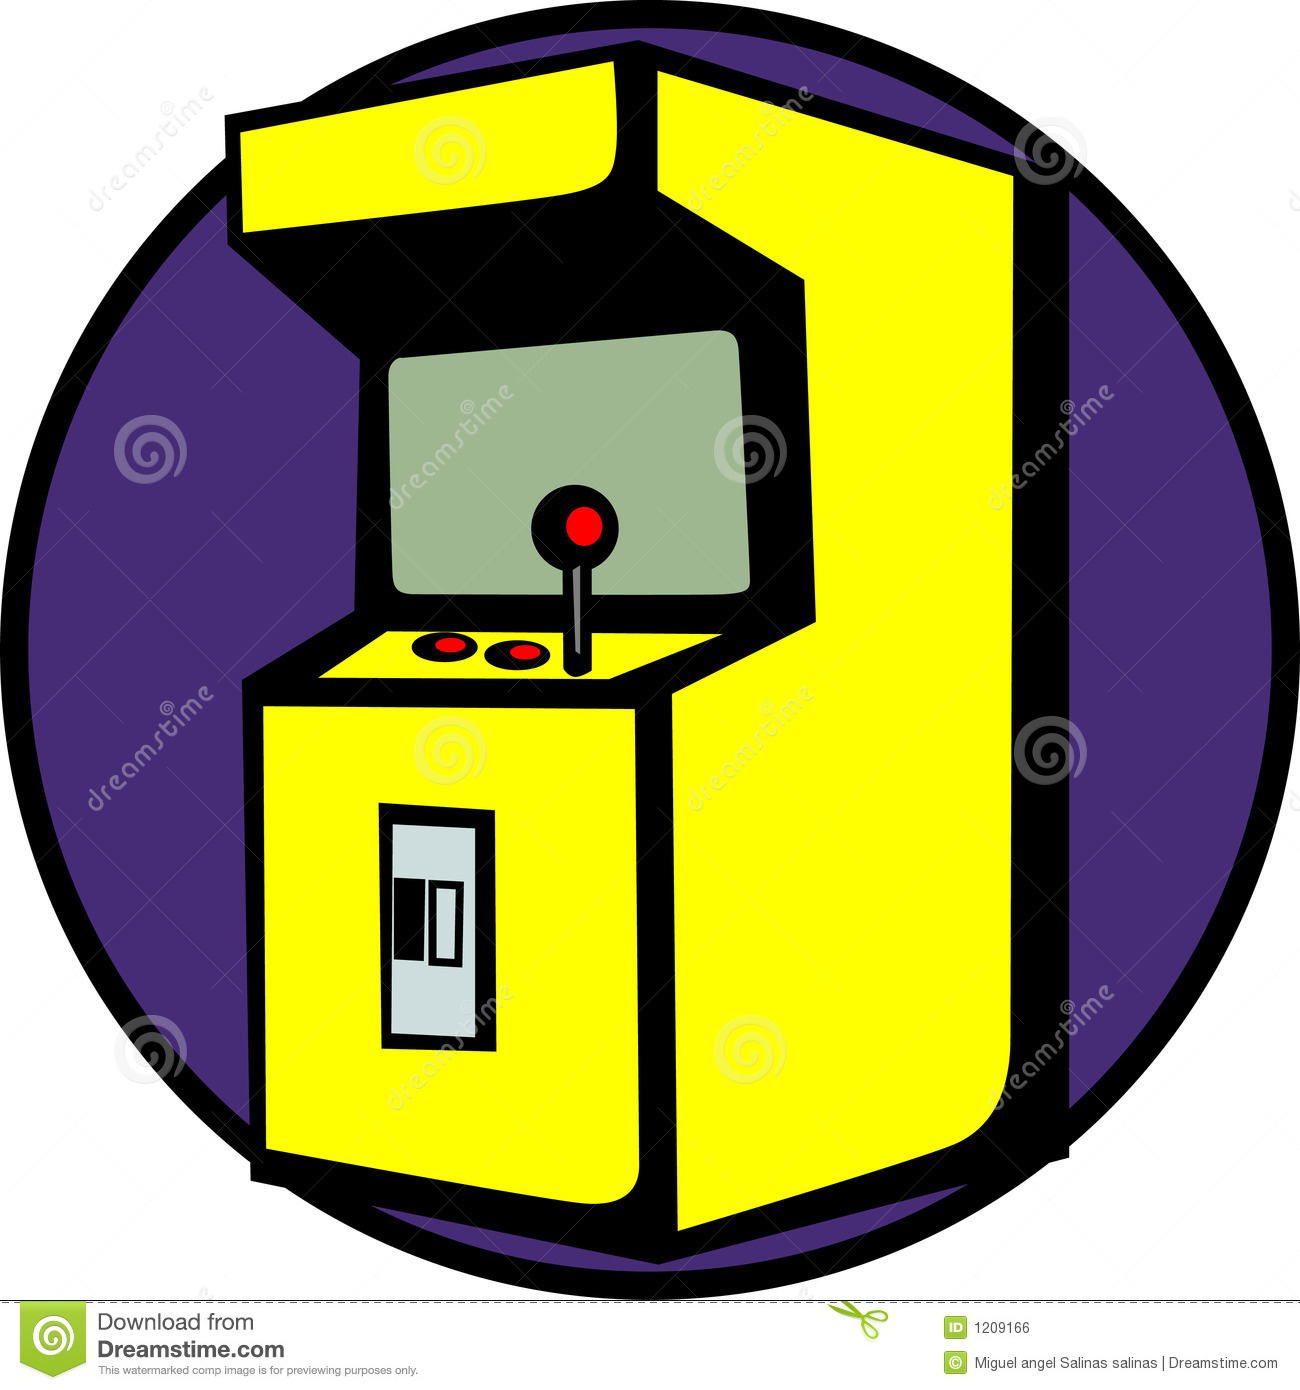 Videogame Arcade Machine Vector Illustration Royalty Free Stock Image